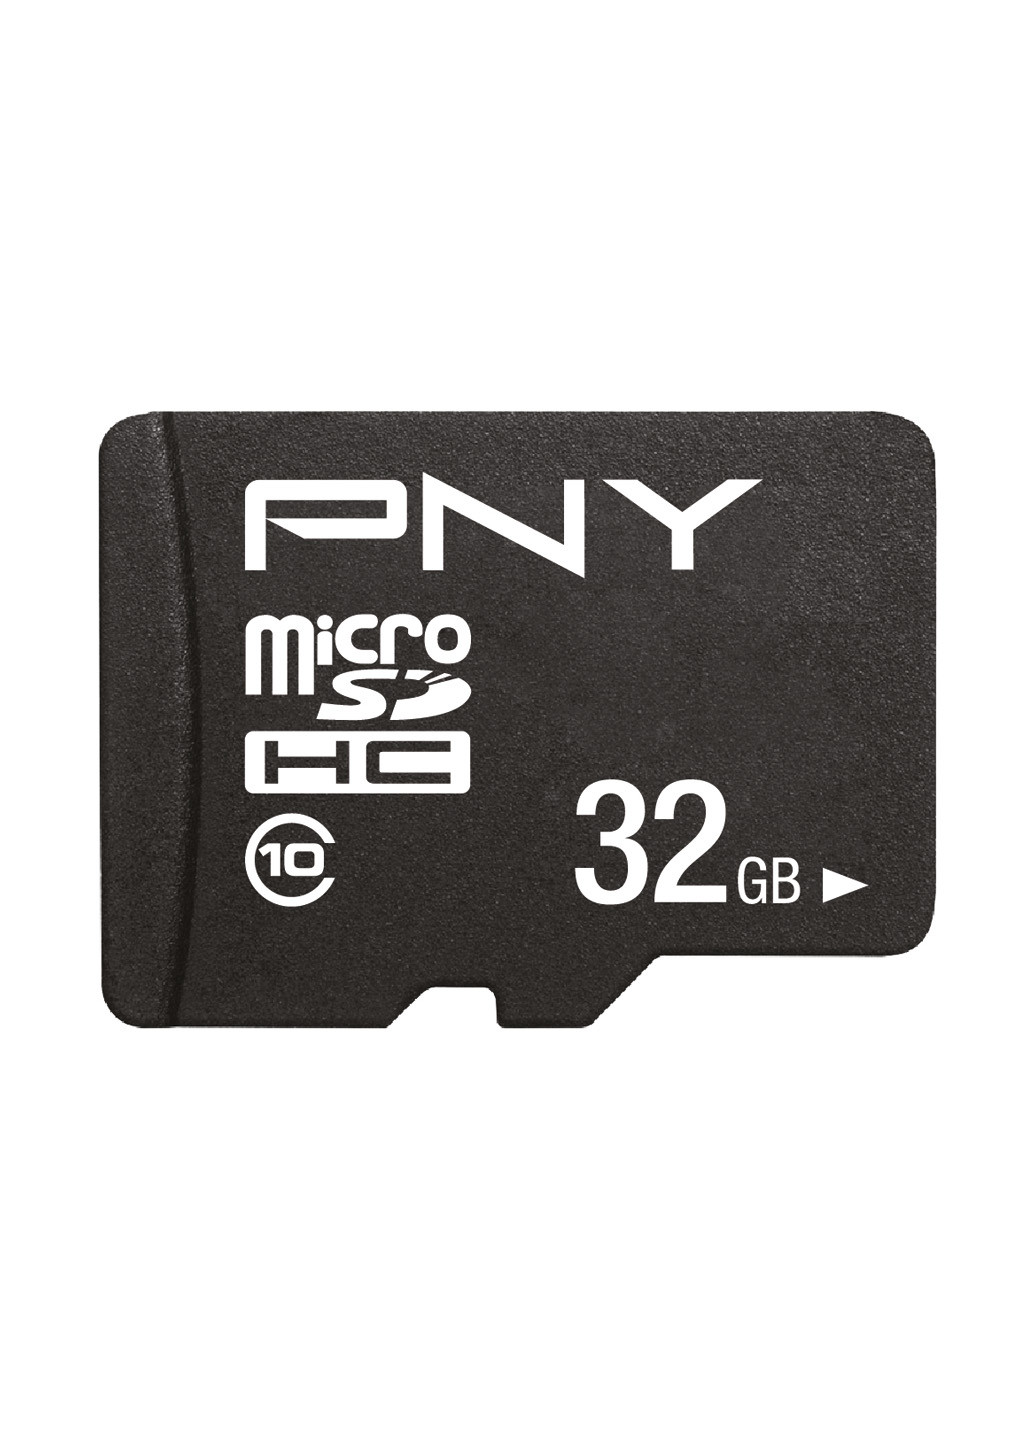 Карта памяти microSDHC Performance Plus 32GB C10 UHS-I + SD-adapter (P-SDU32G10PPL-GE) PNY карта памяти pny microsdhc performance plus 32gb c10 uhs-i + sd-adapter (p-sdu32g10ppl-ge) (135511869)